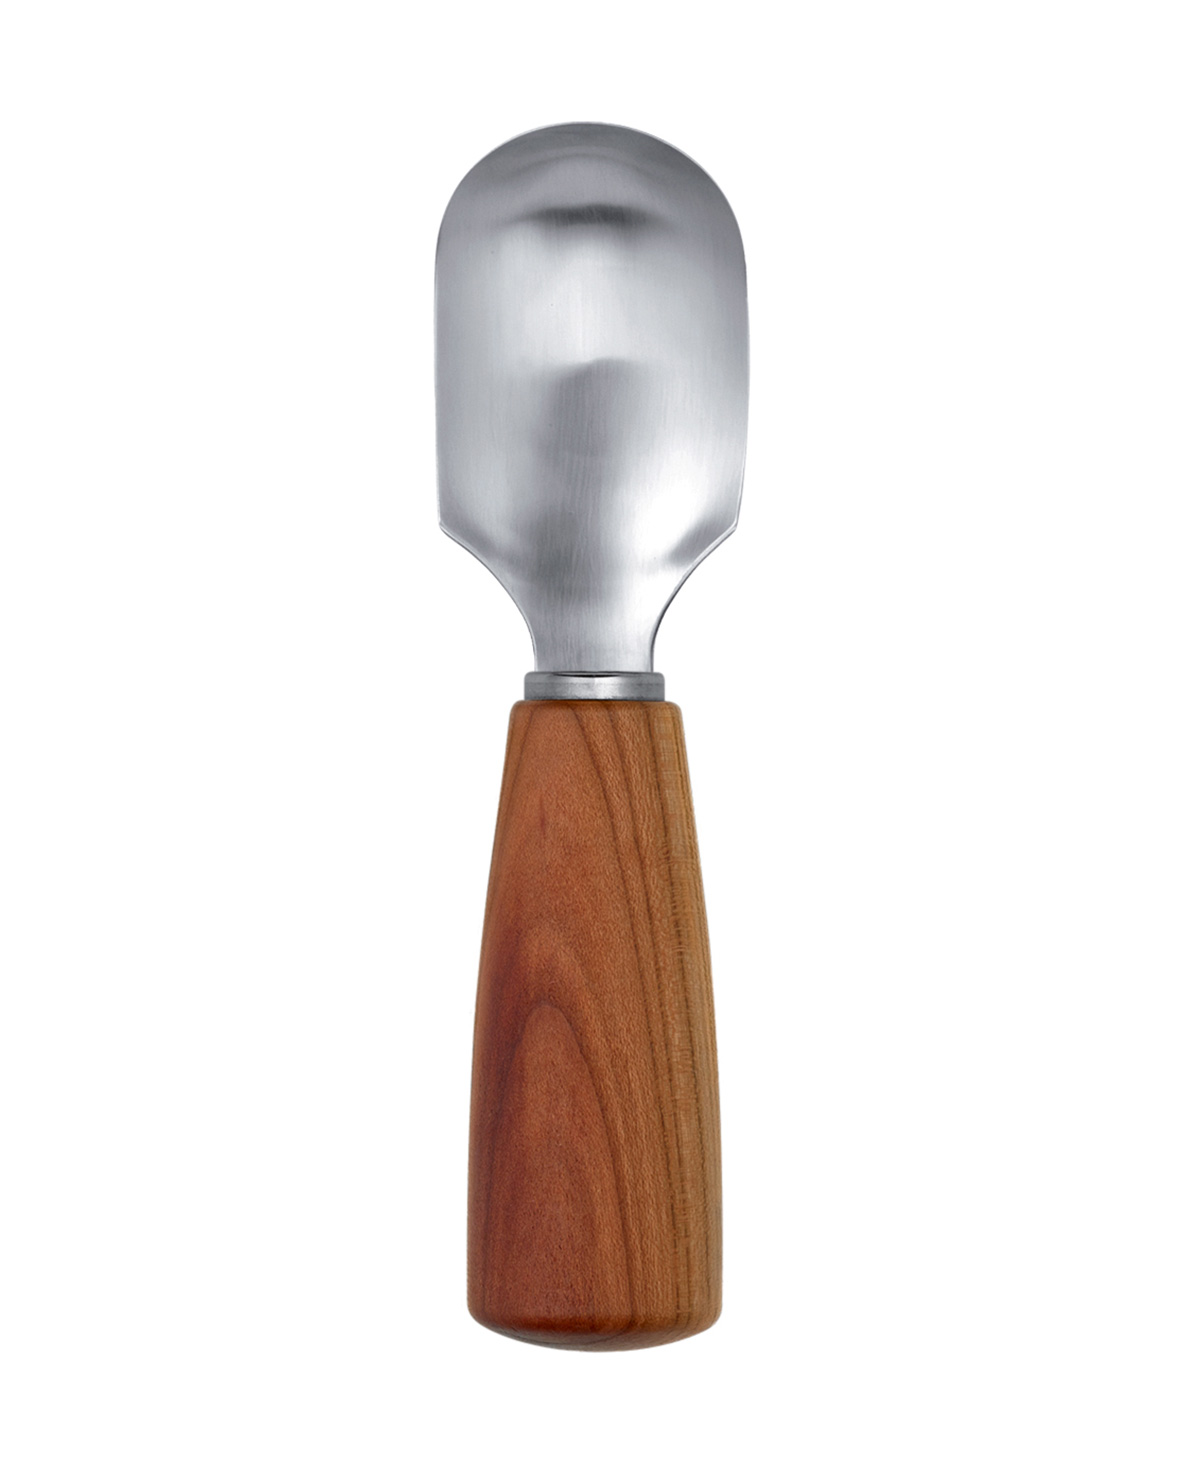 triangle Fruit spoon Soul plum wood scoop wooden handle